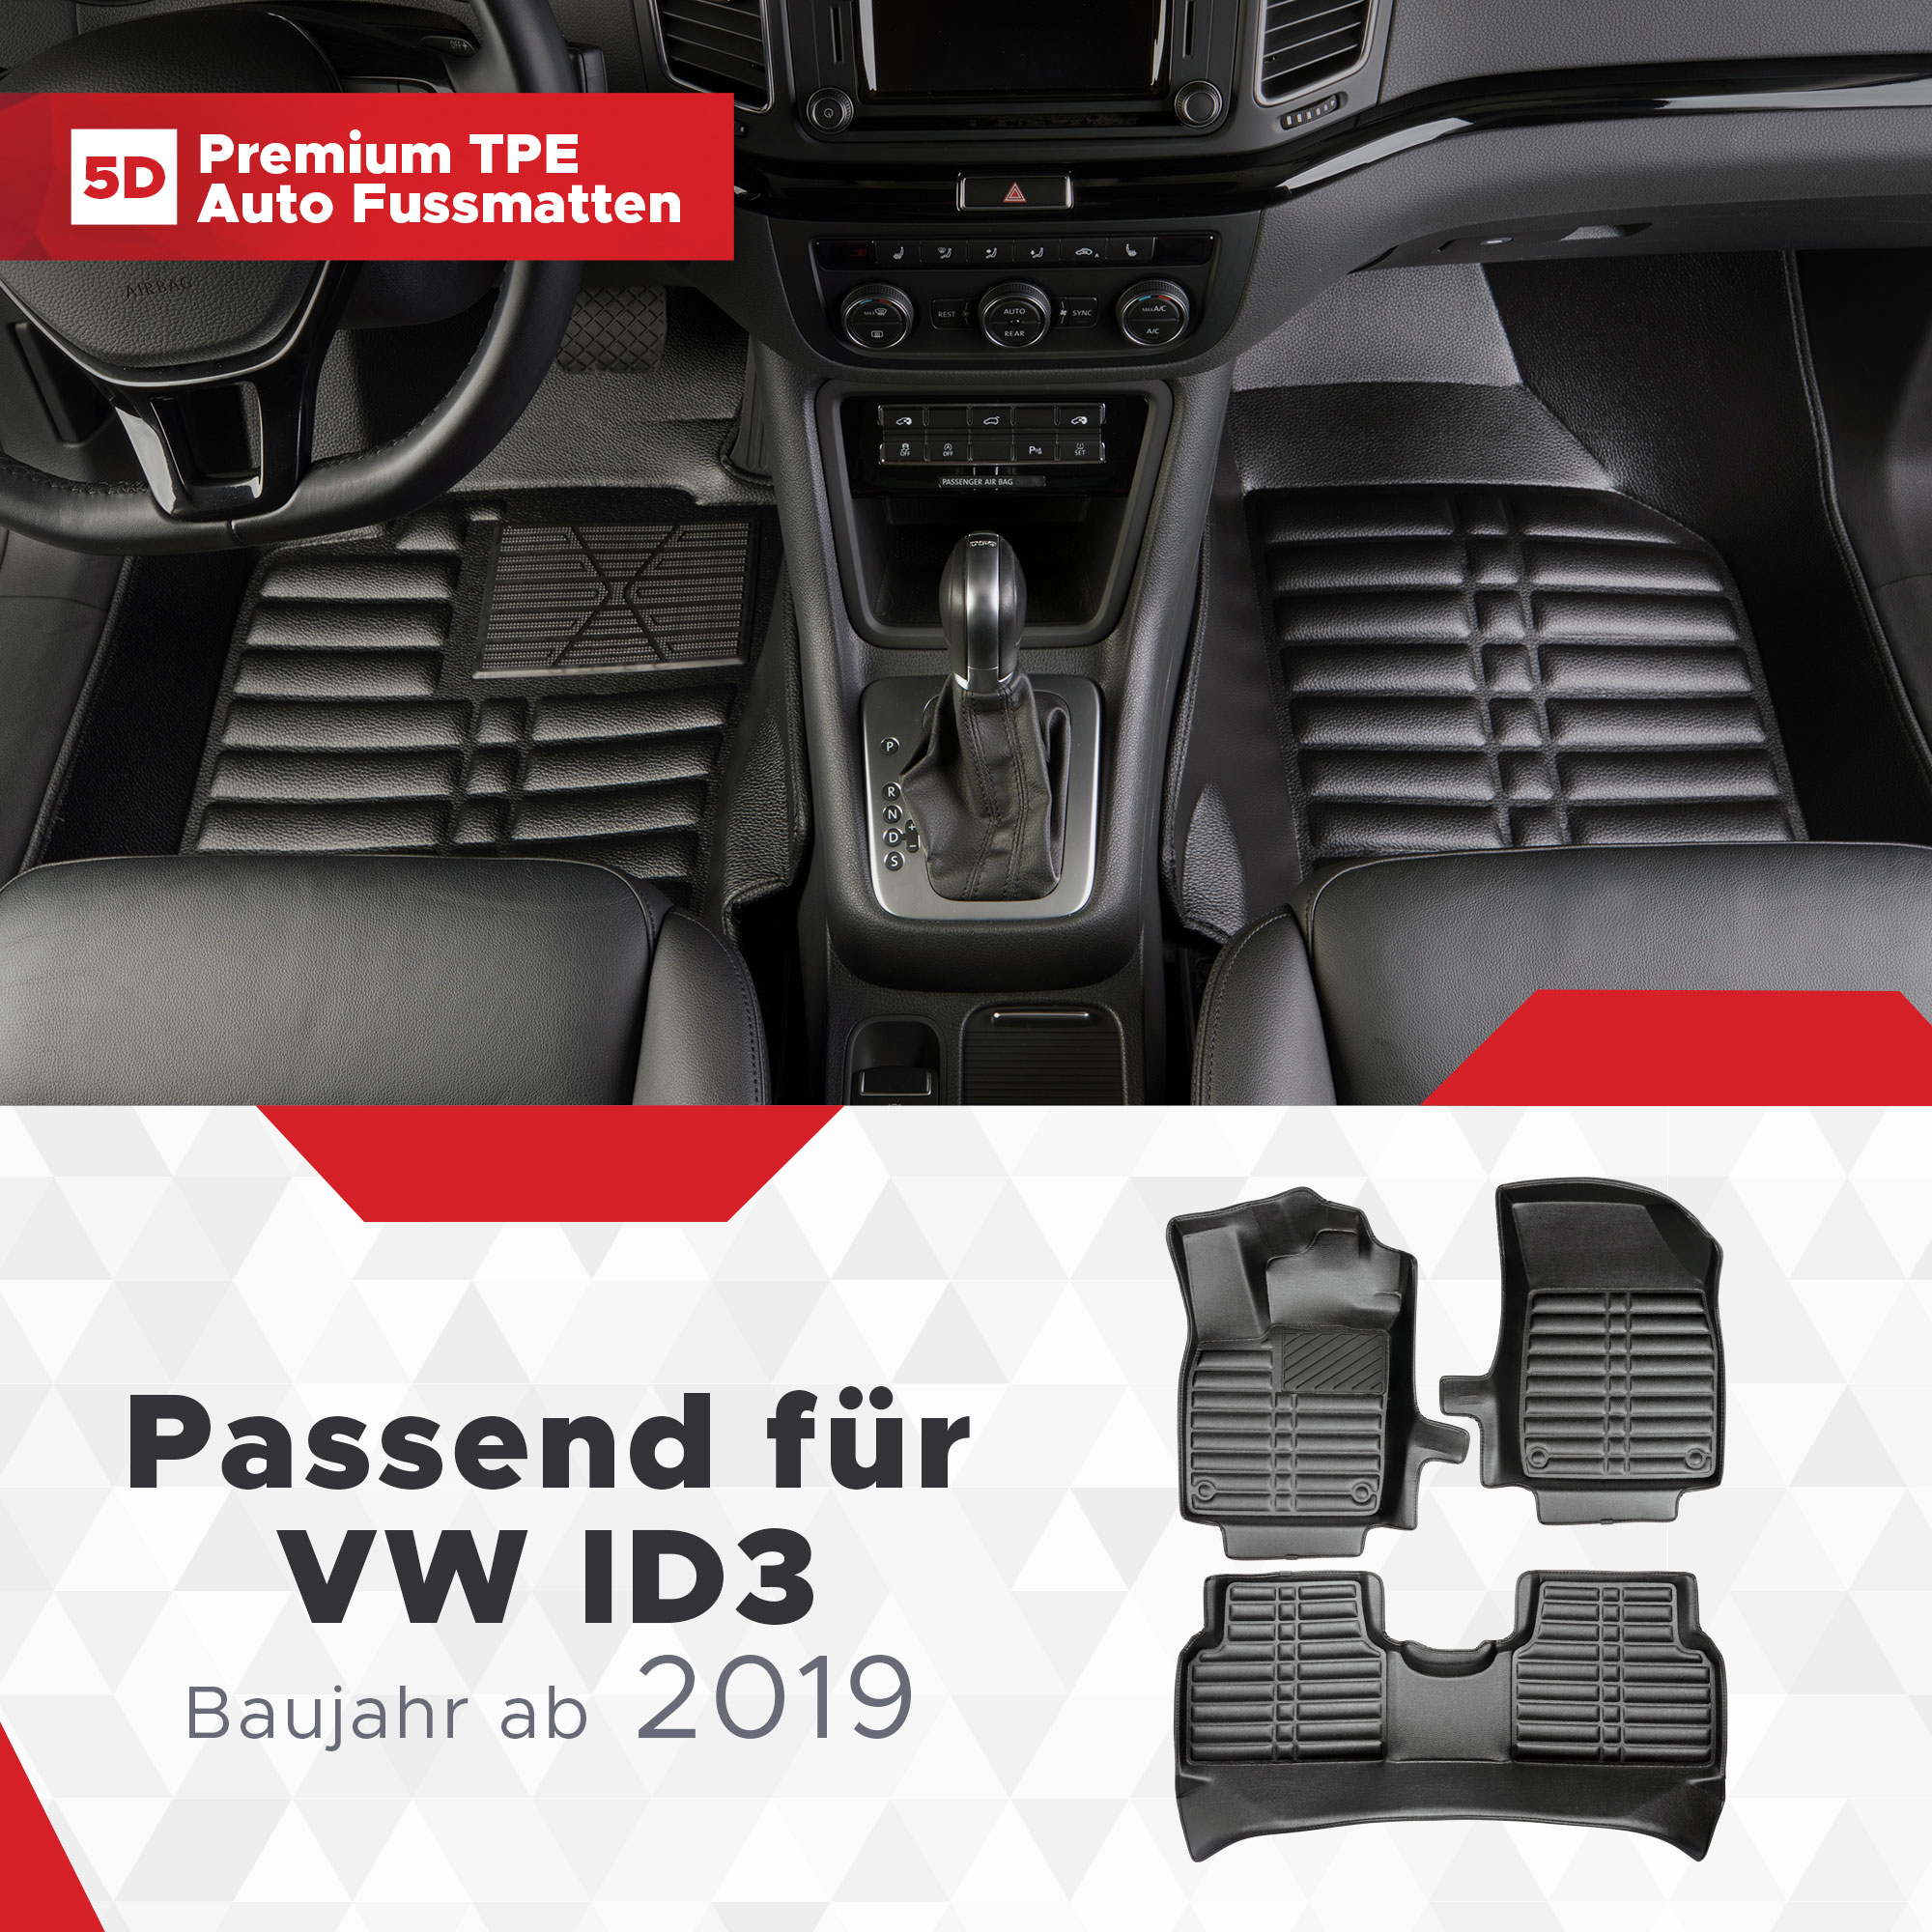 5D VW ID3 TPE Gummifußmatten Bj. ab 2019 - fussmattenprofi